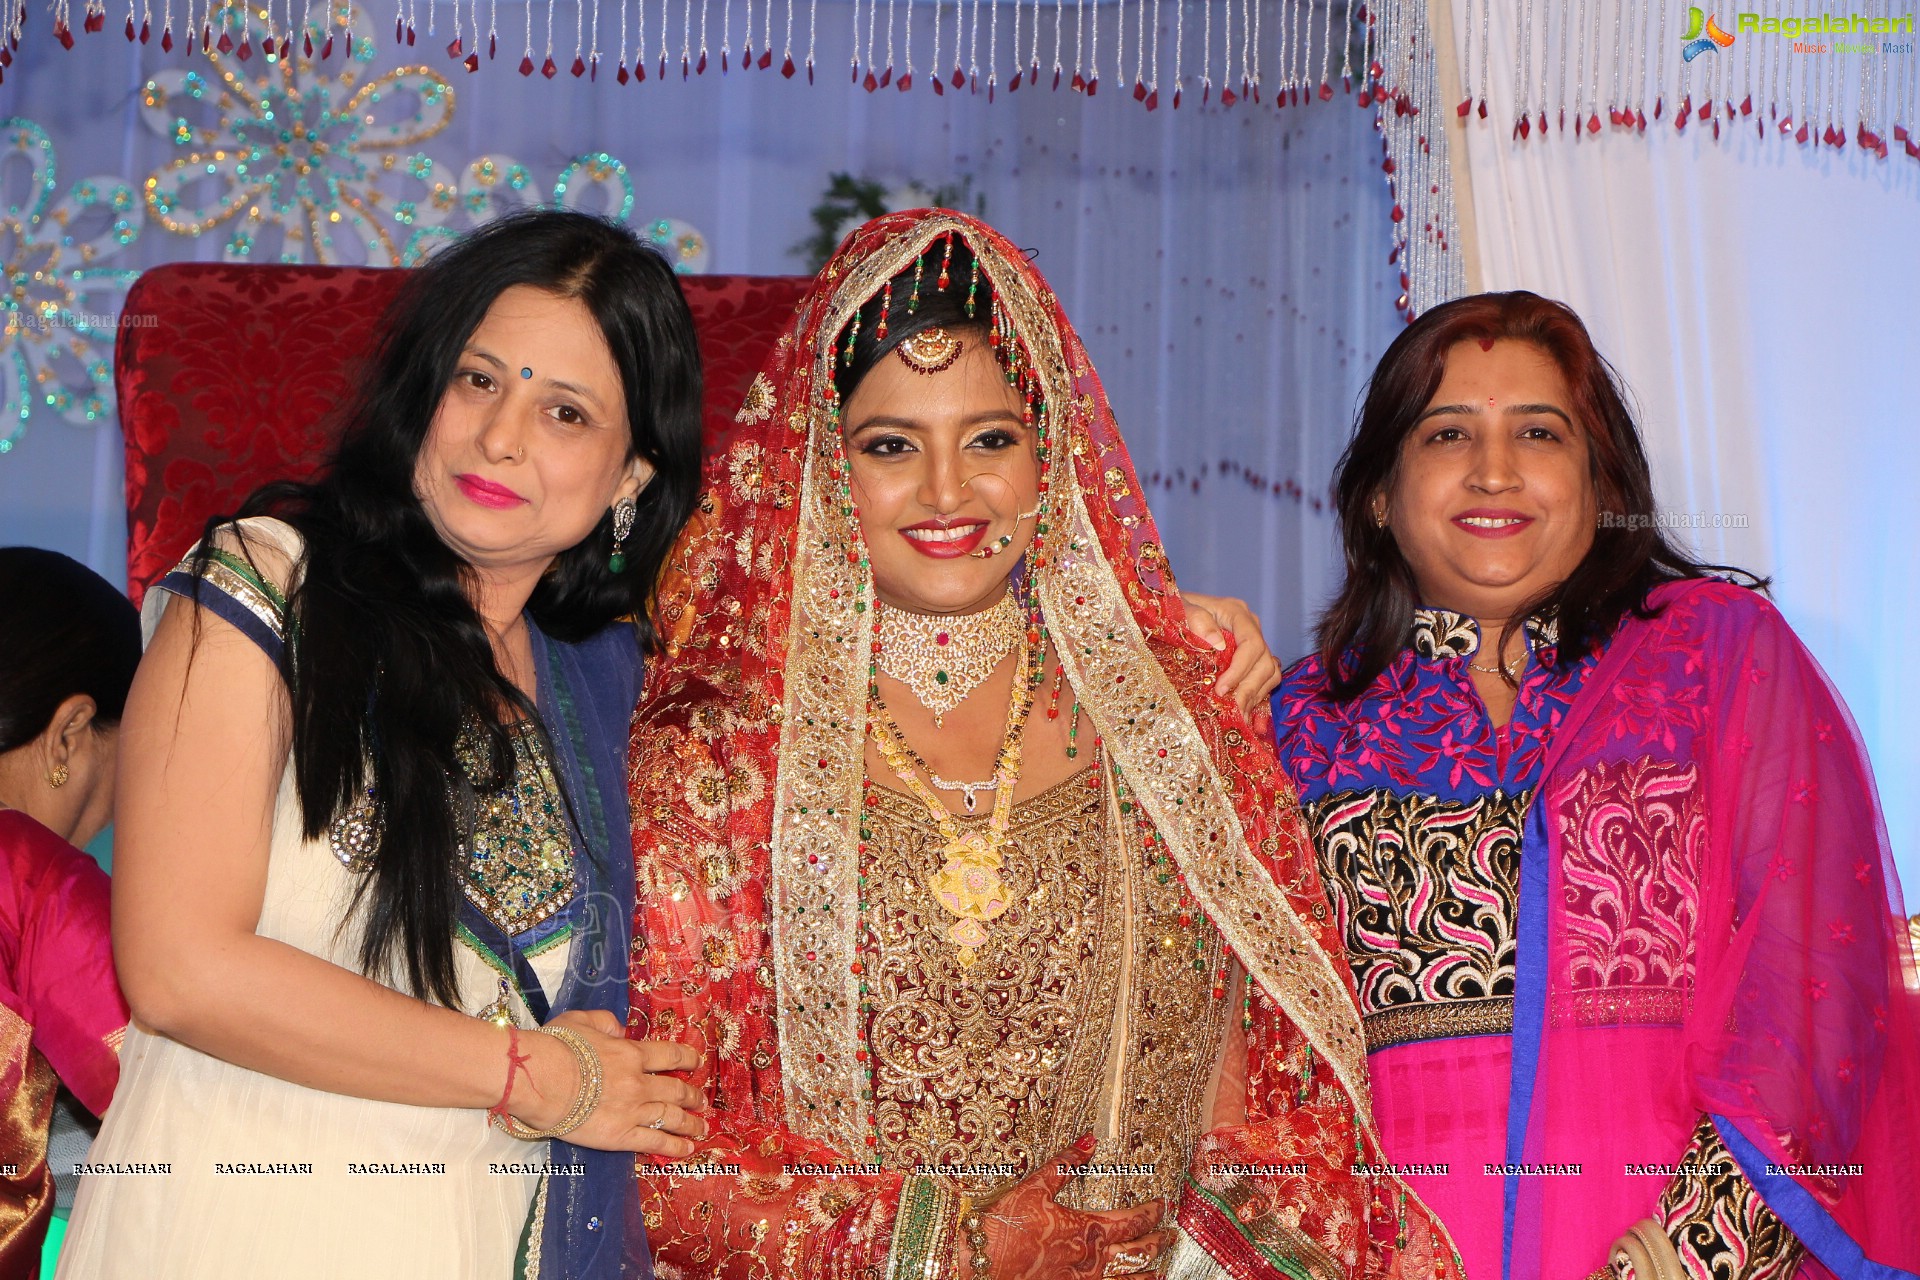 Grand Wedding of Sana's Daughter Tabasum